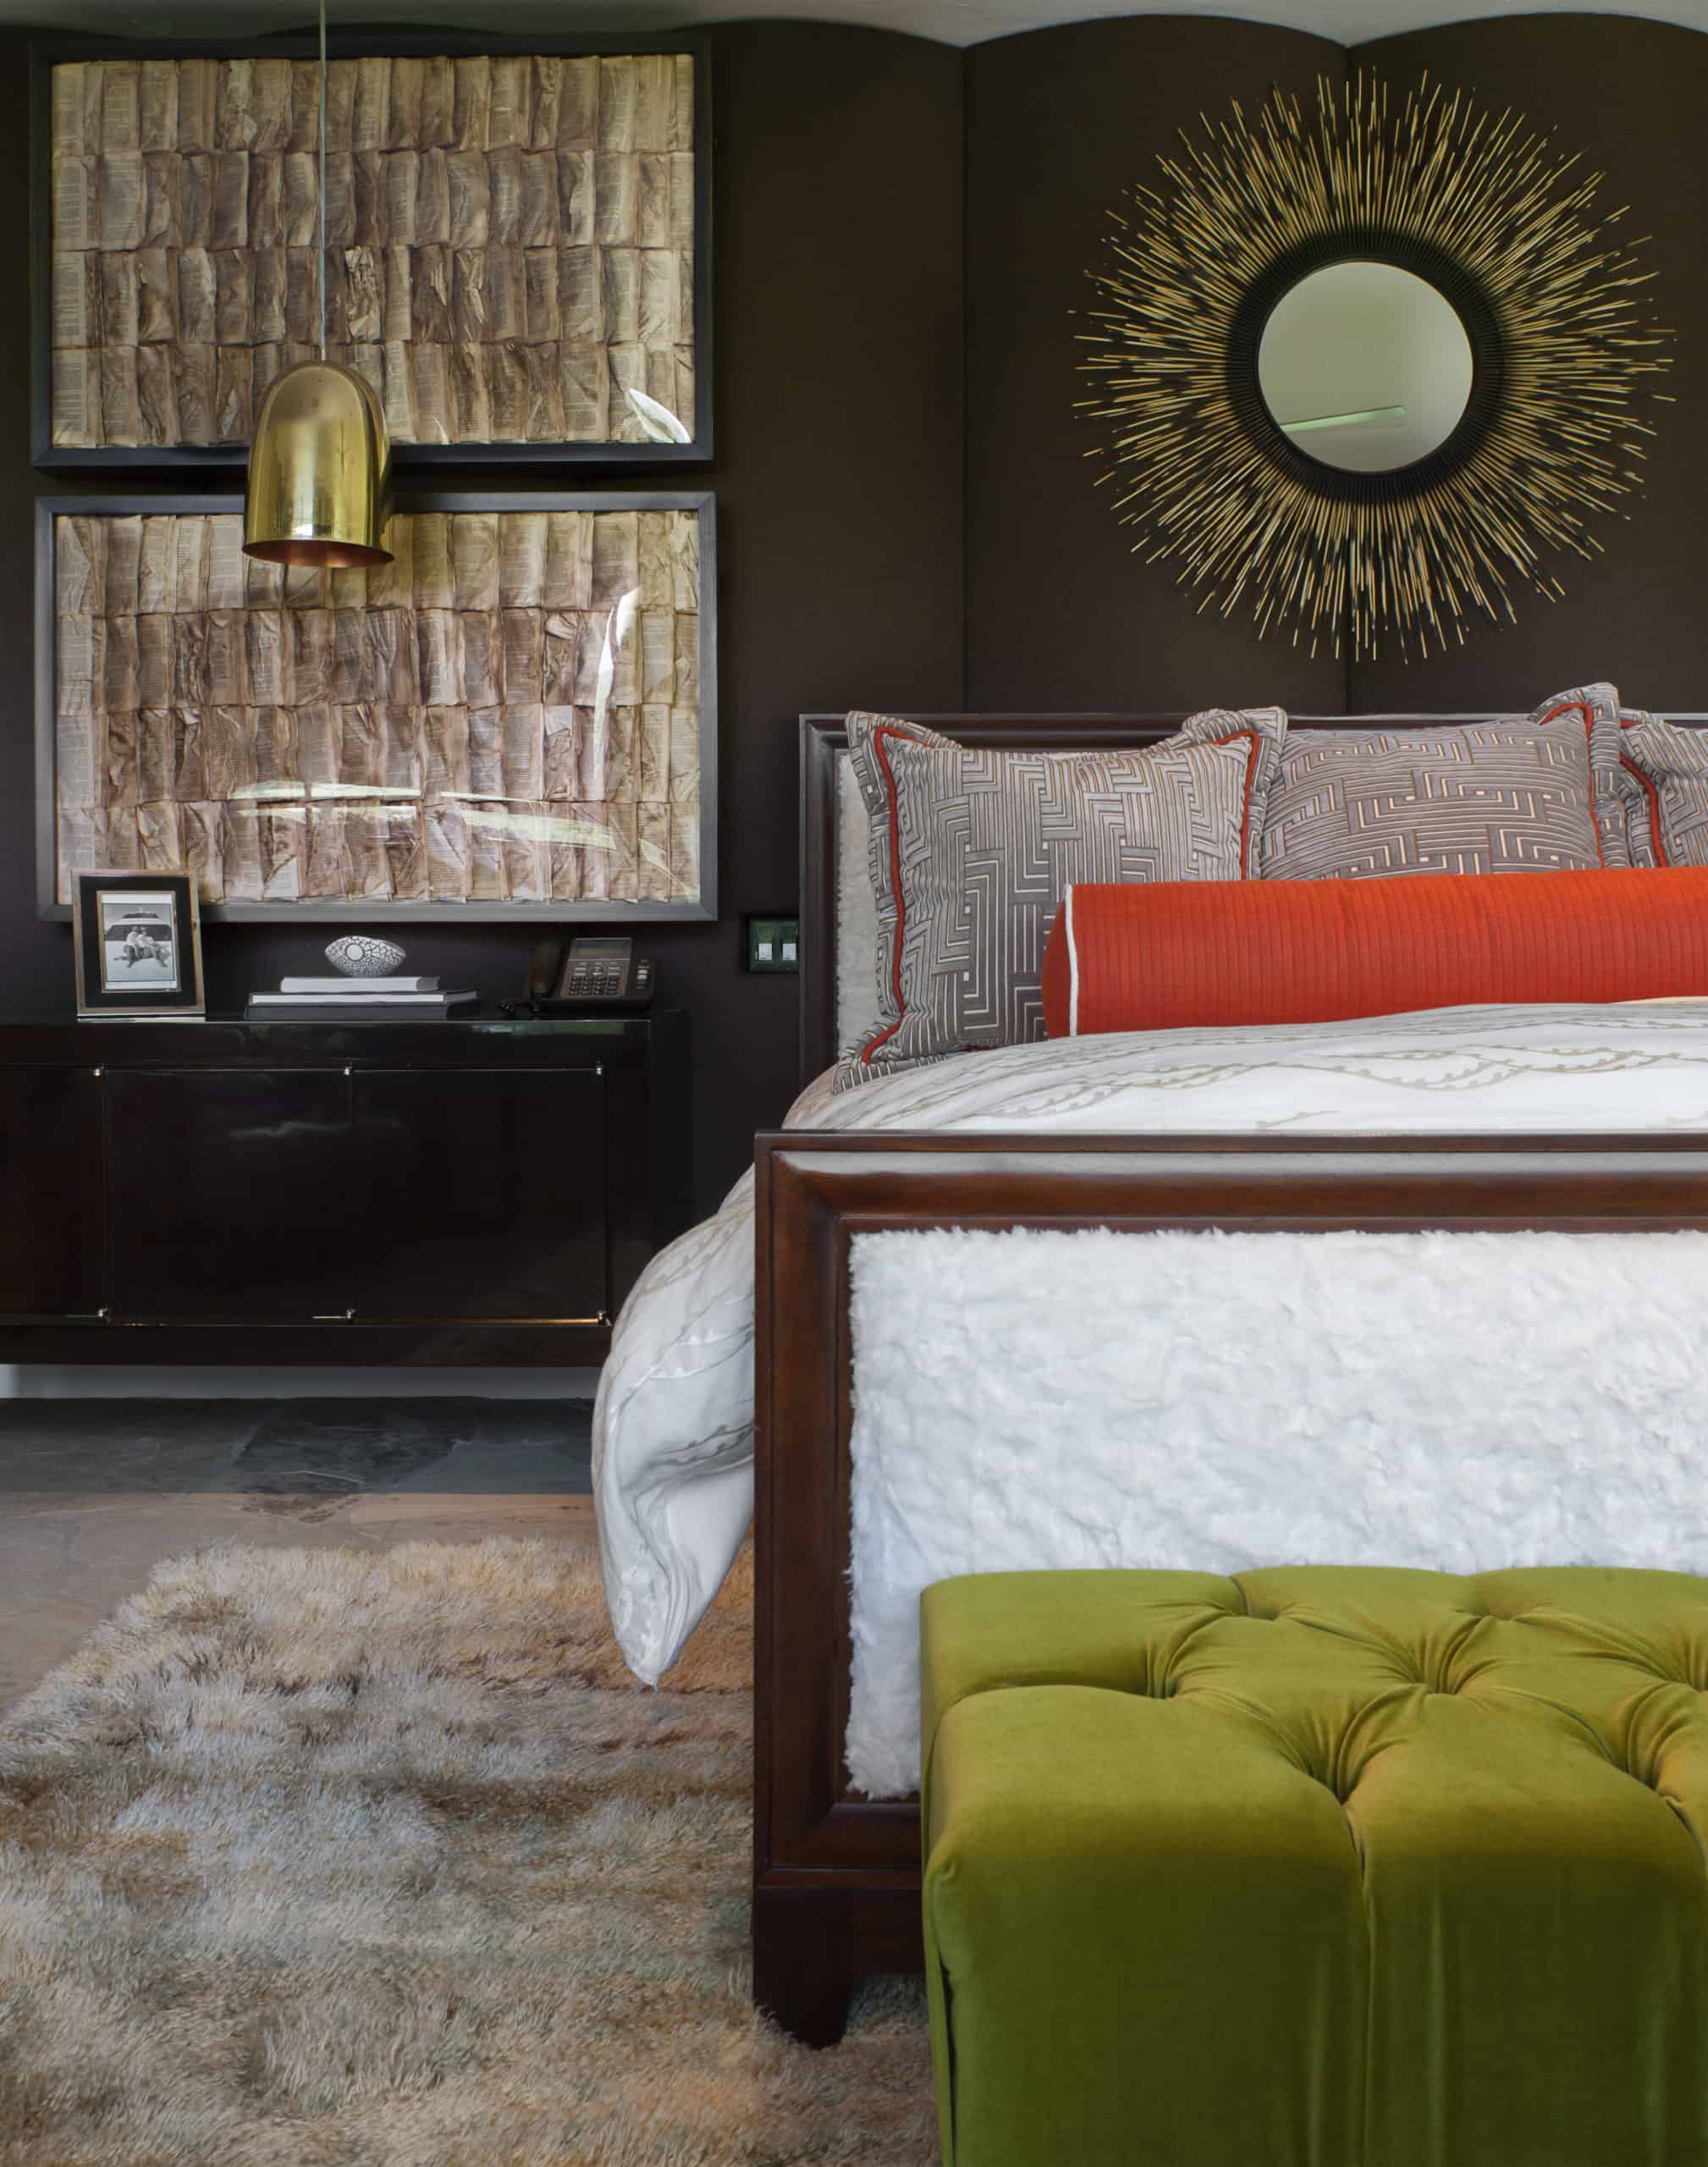 Dazzling Bedroom with starburst mirror, opulent wallpaper and dreamy bedding